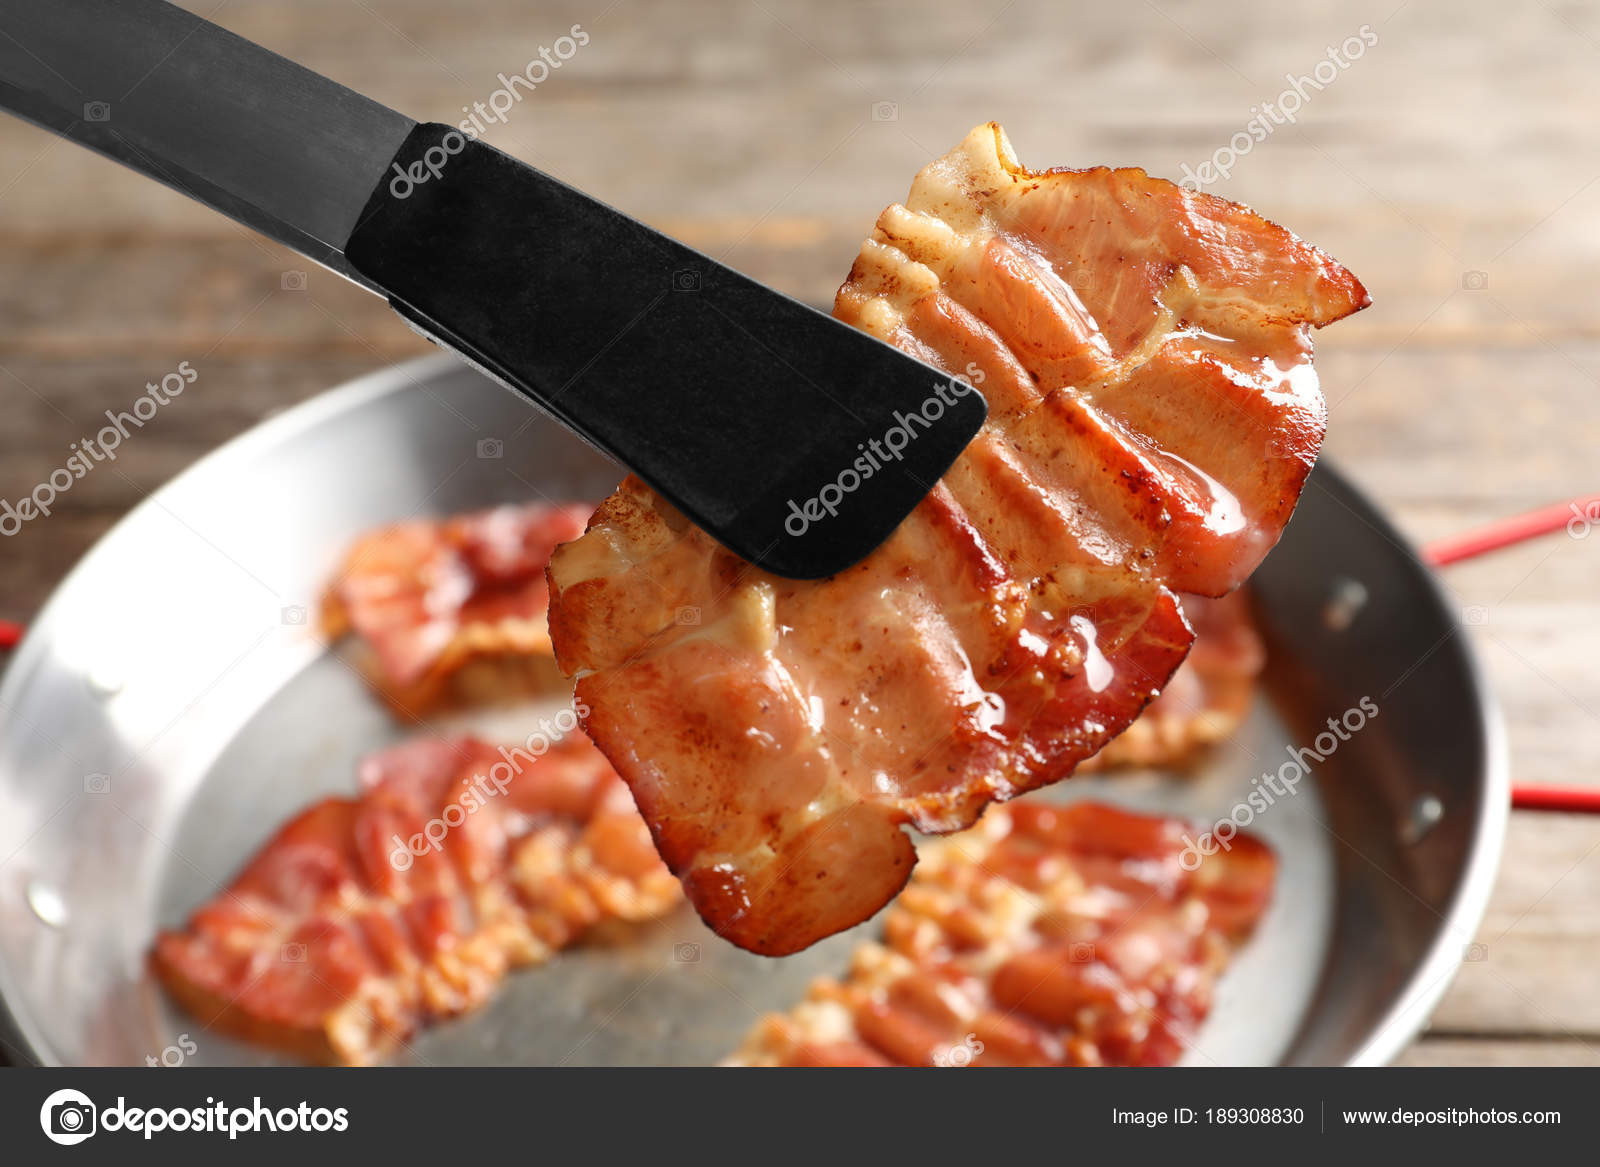 https://st3.depositphotos.com/16122460/18930/i/1600/depositphotos_189308830-stock-photo-tongs-with-fried-bacon-over.jpg